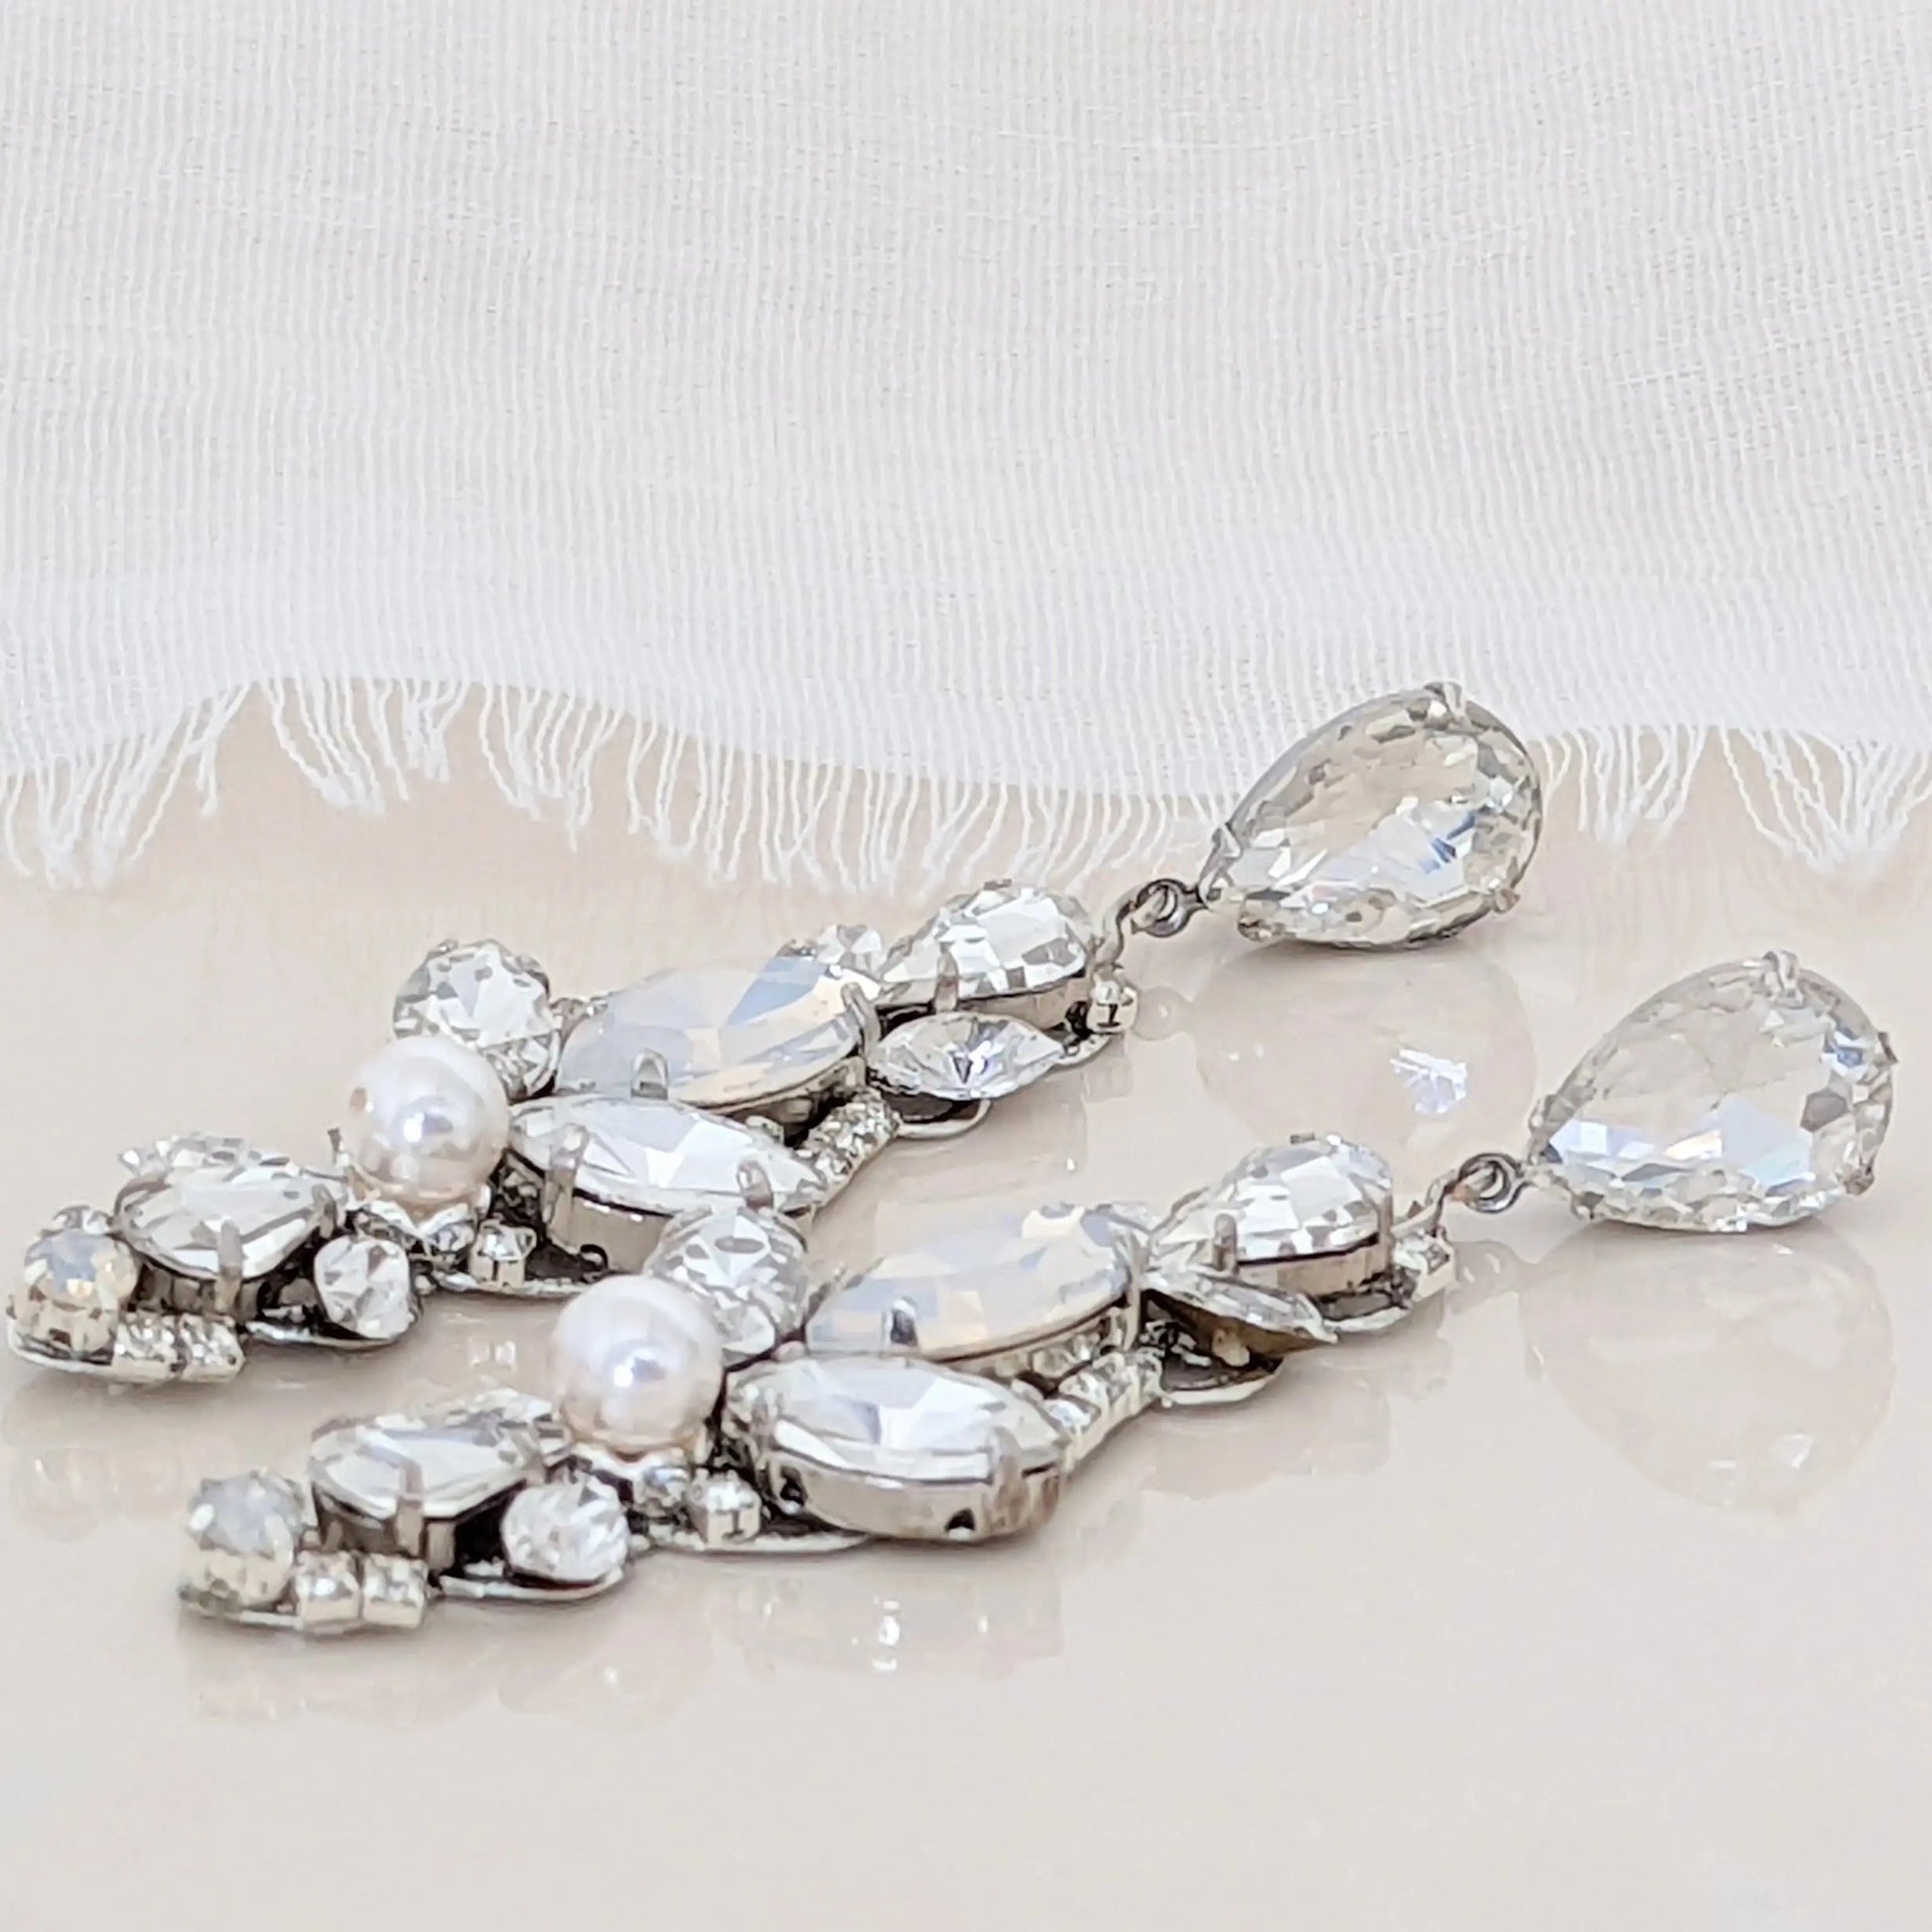 bridal drop earrings